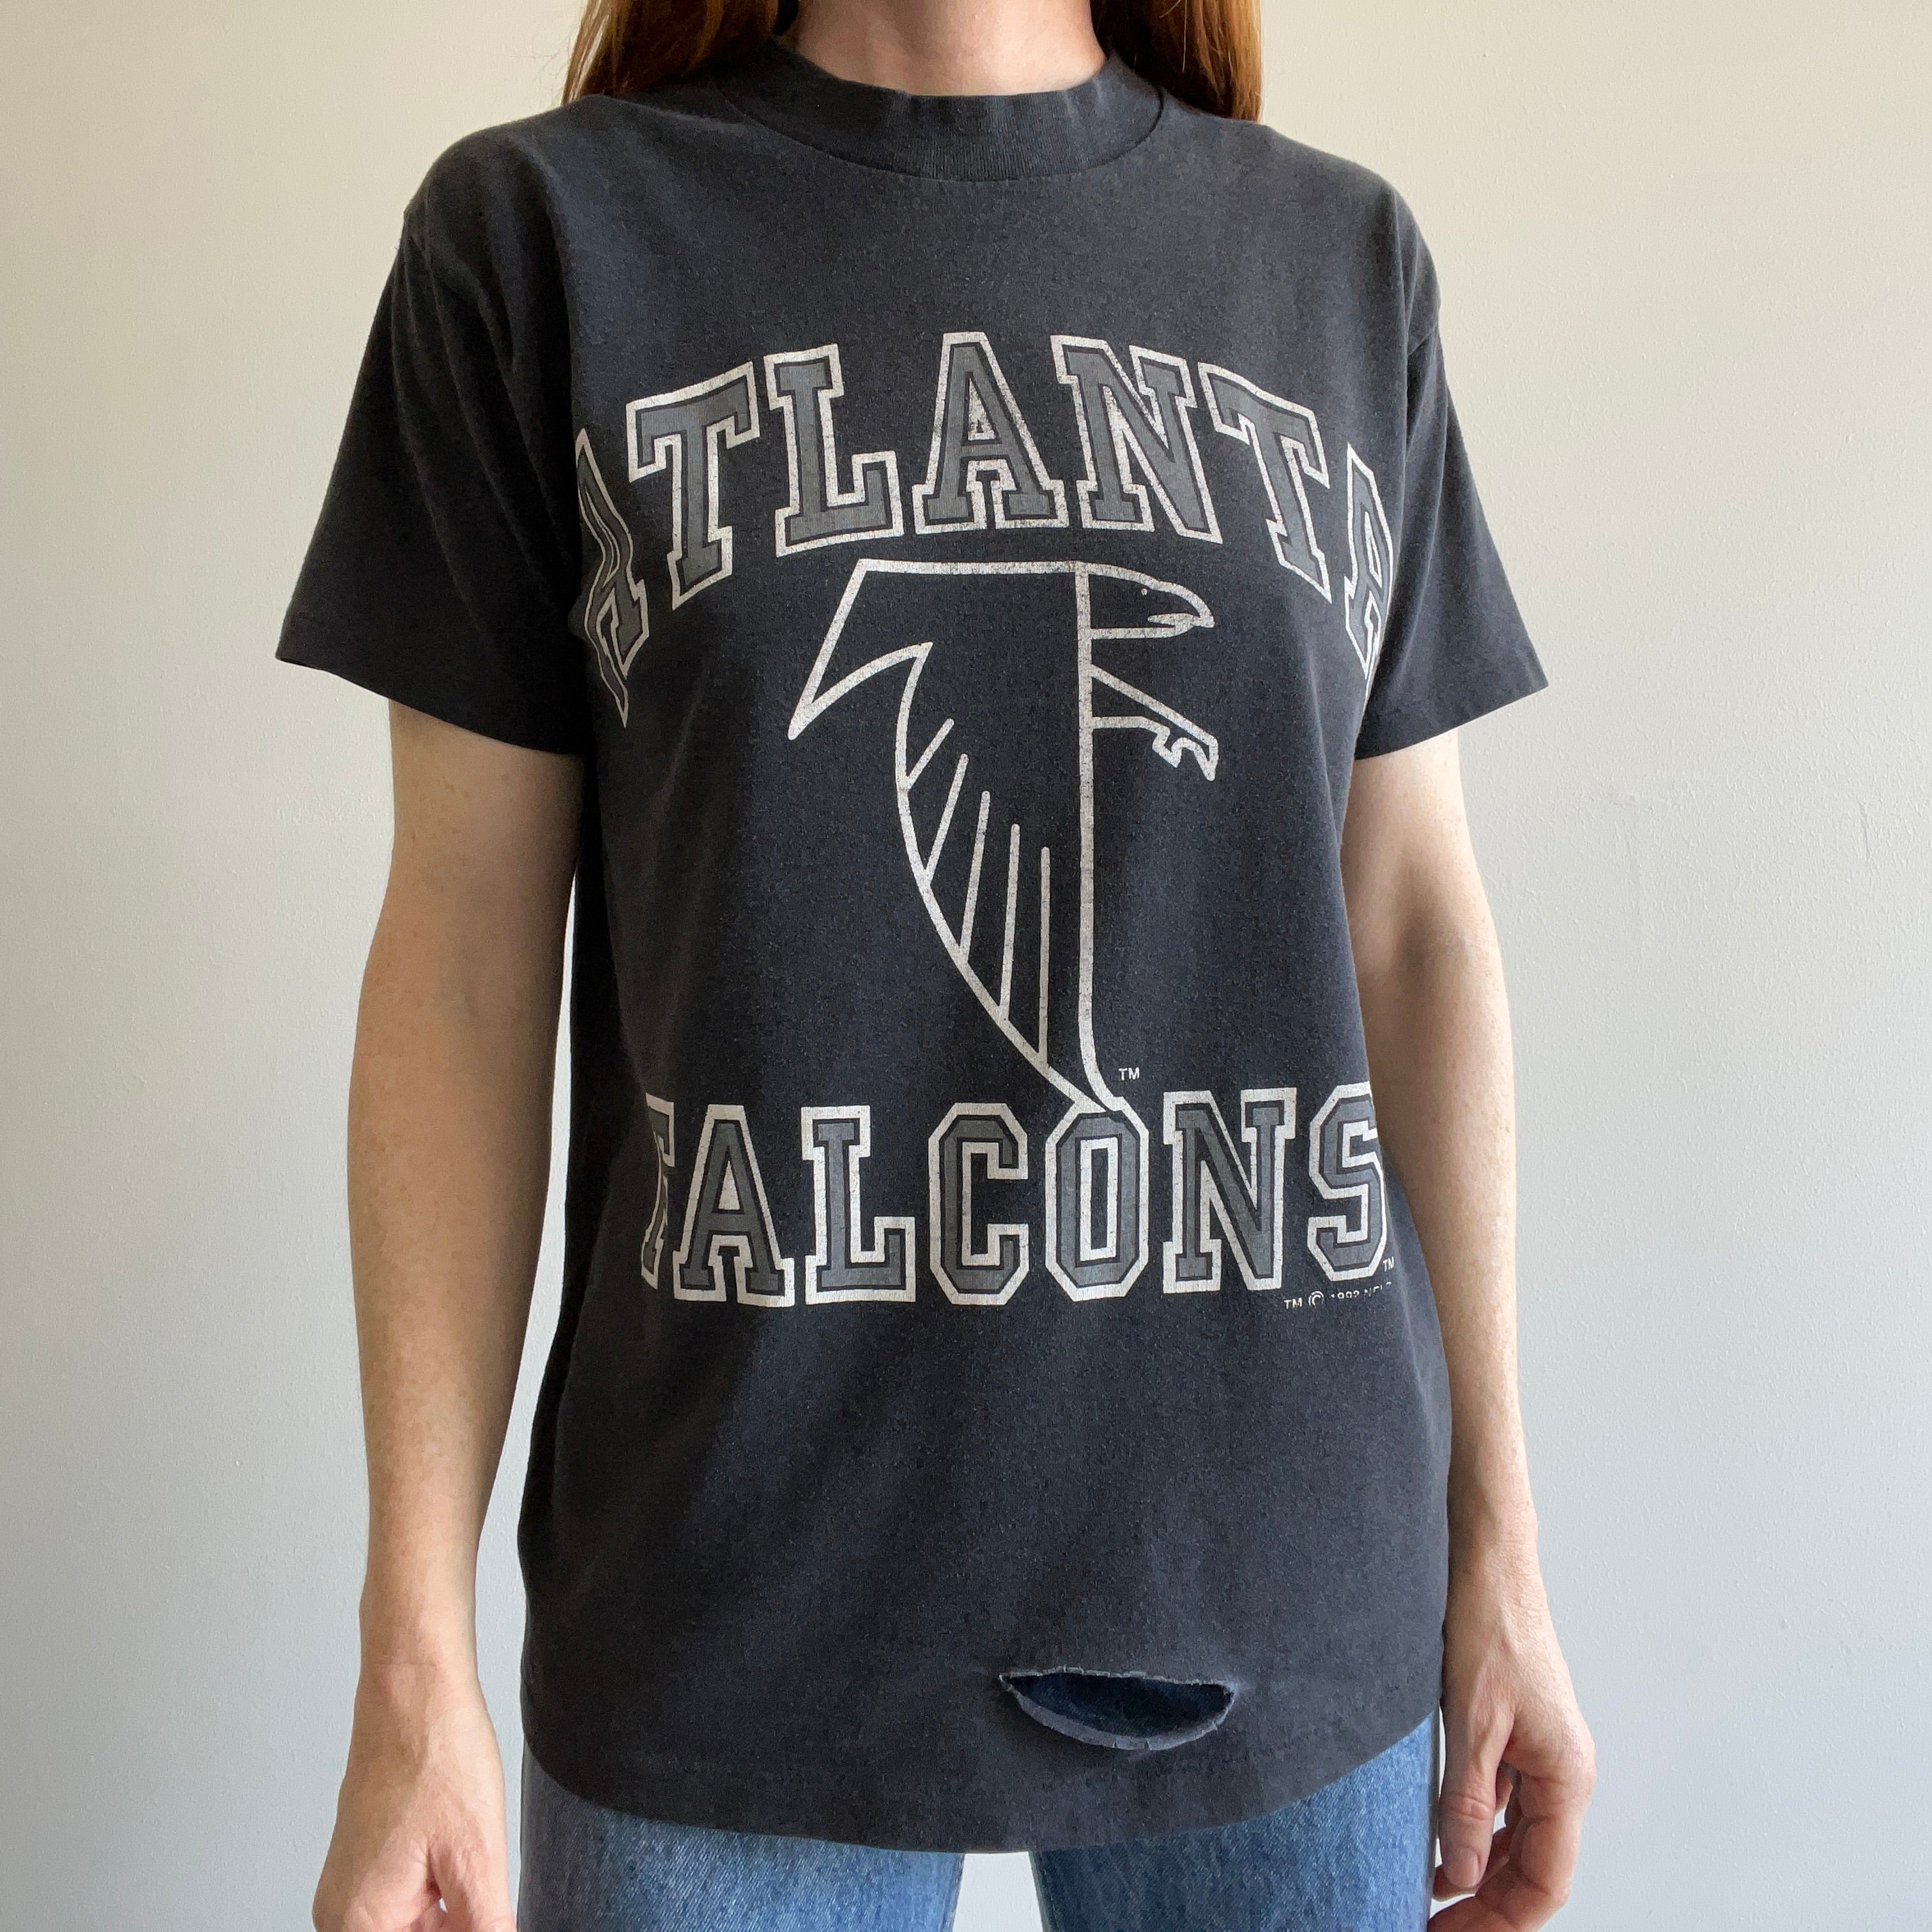 Atlanta Falcons - The top hits of the 1990s!